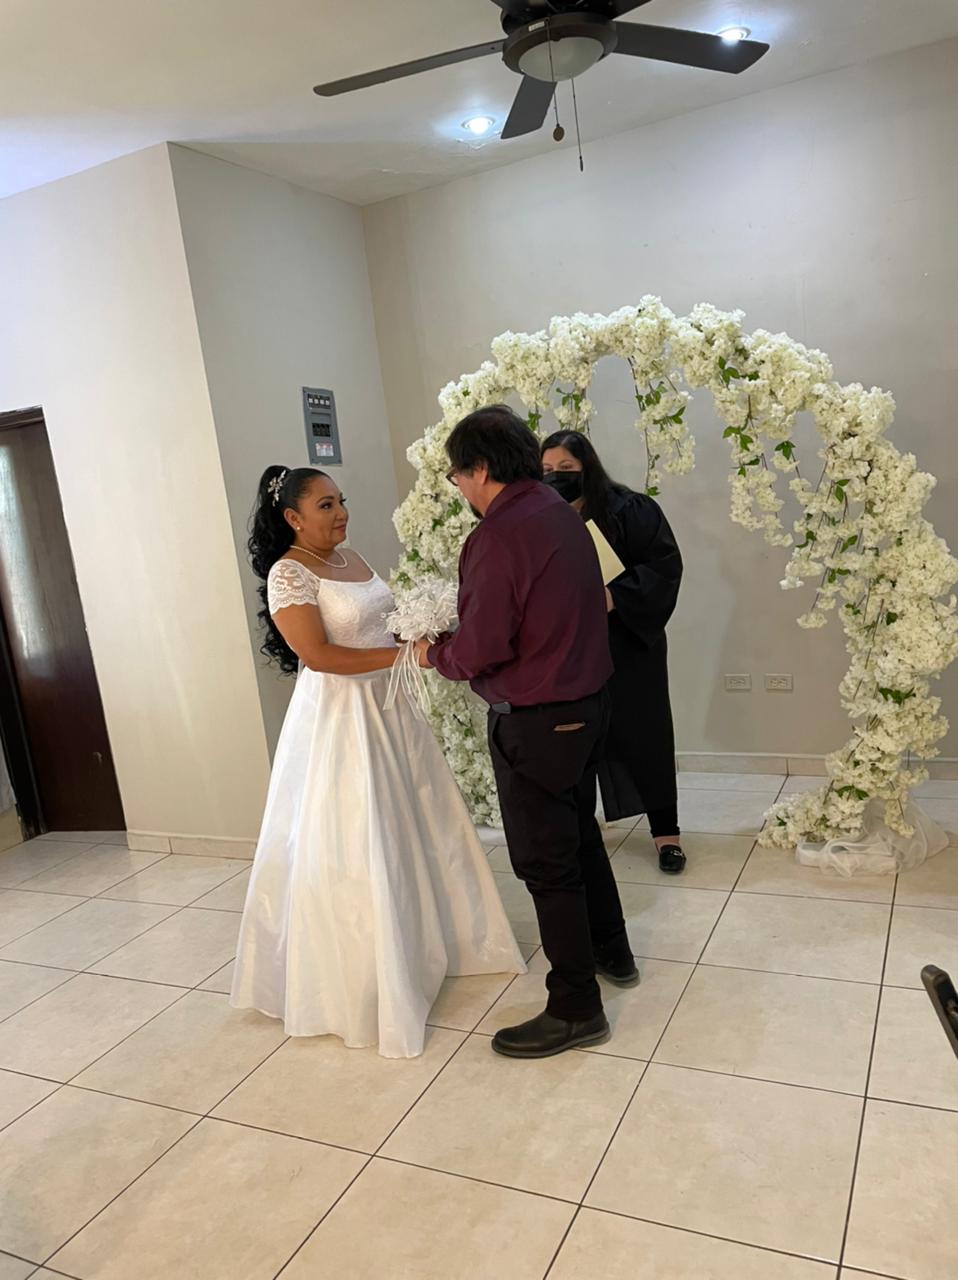 Cristina N. Acevedo - Your Wedding Officiant